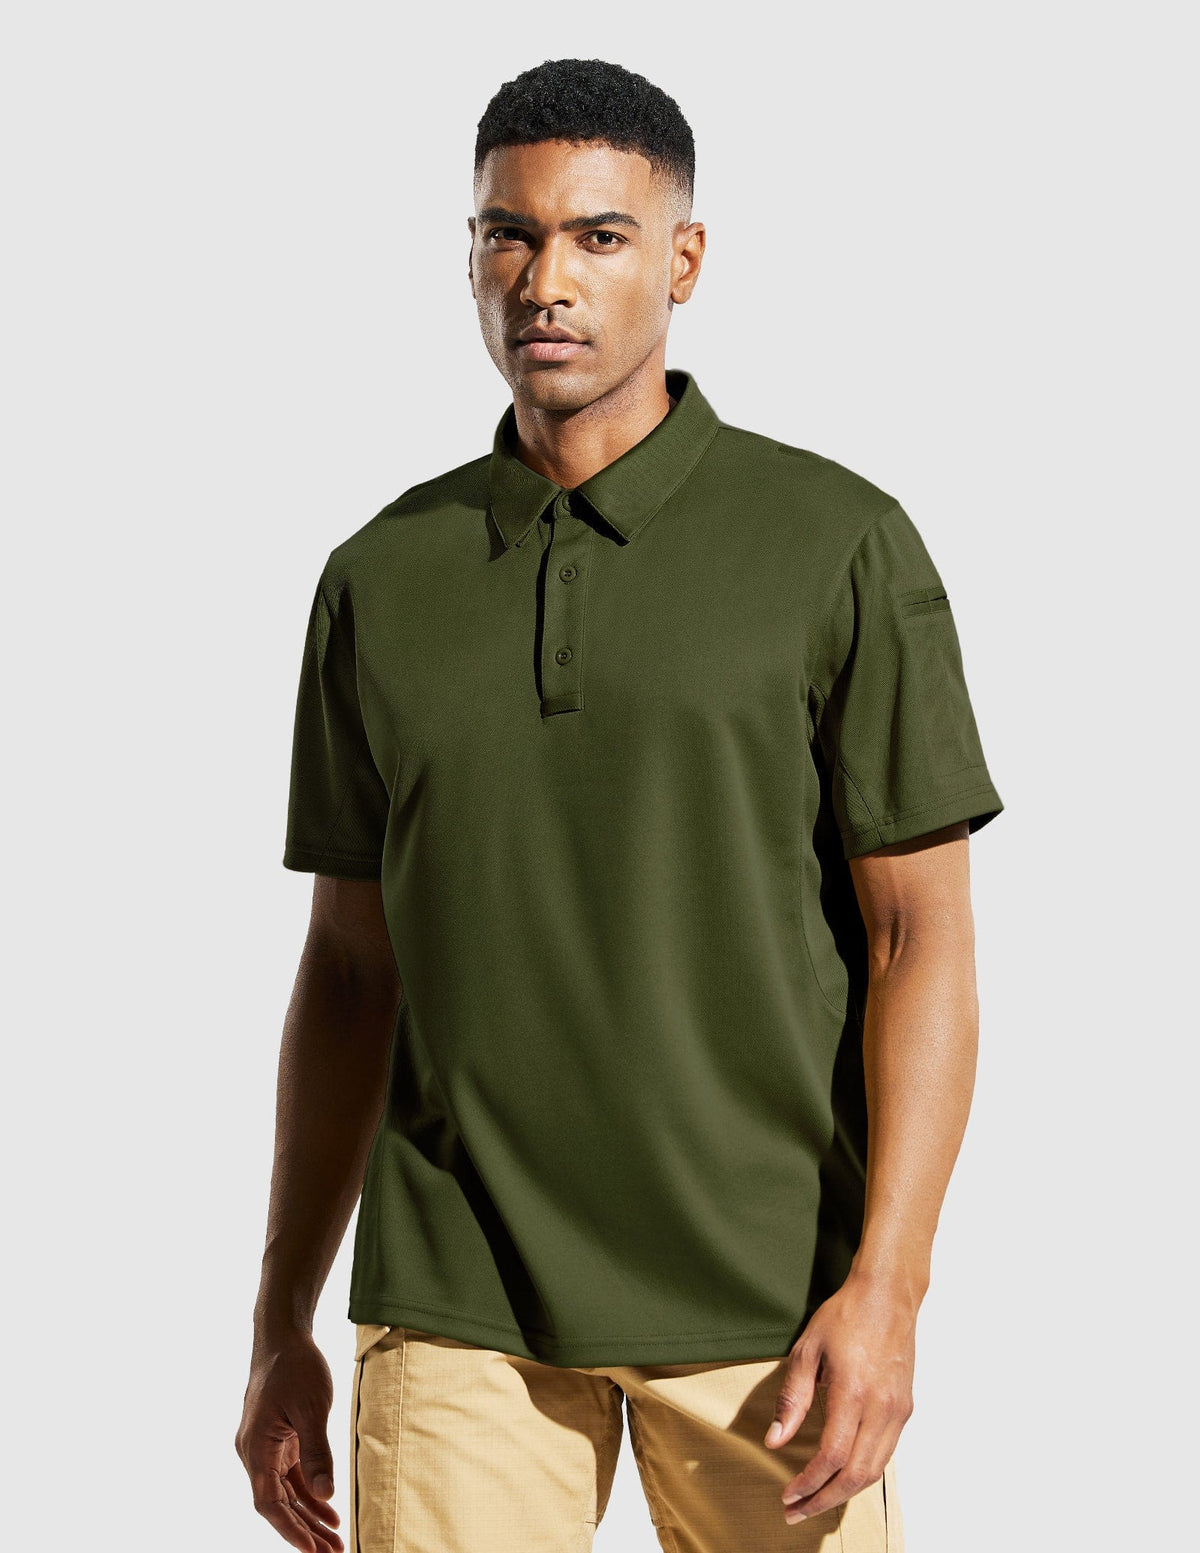 Men's Tactical Polo Shirts Outdoor Performance Collared Shirt Men Polo Army Green / S MIER